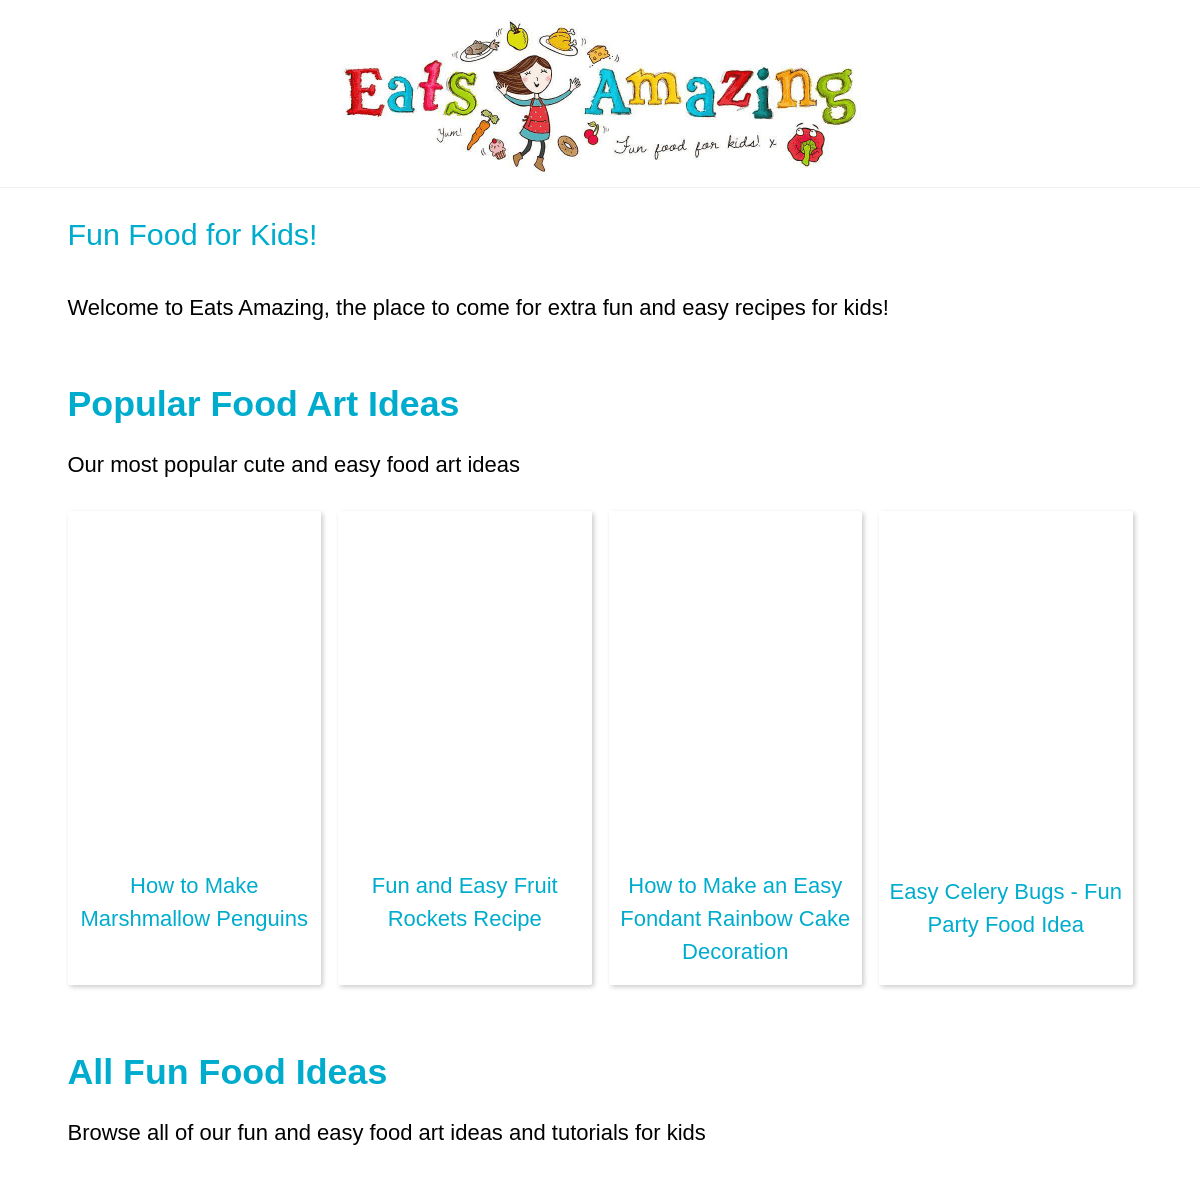 A complete backup of https://eatsamazing.co.uk